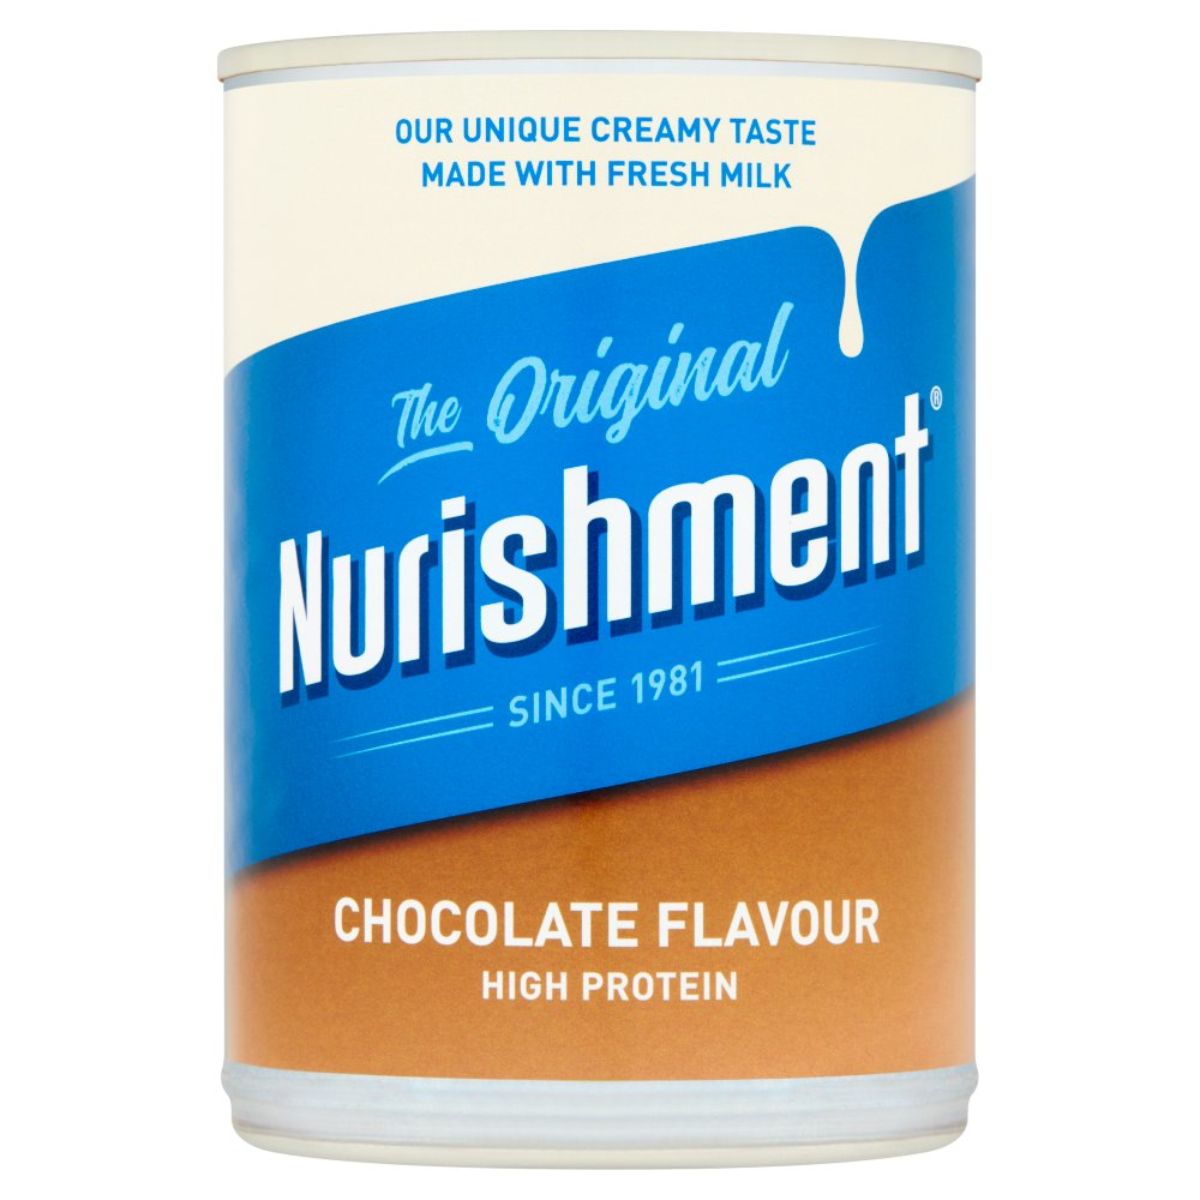 The original Nurishment - Chocolate Flavour - 370ml high protein milk.